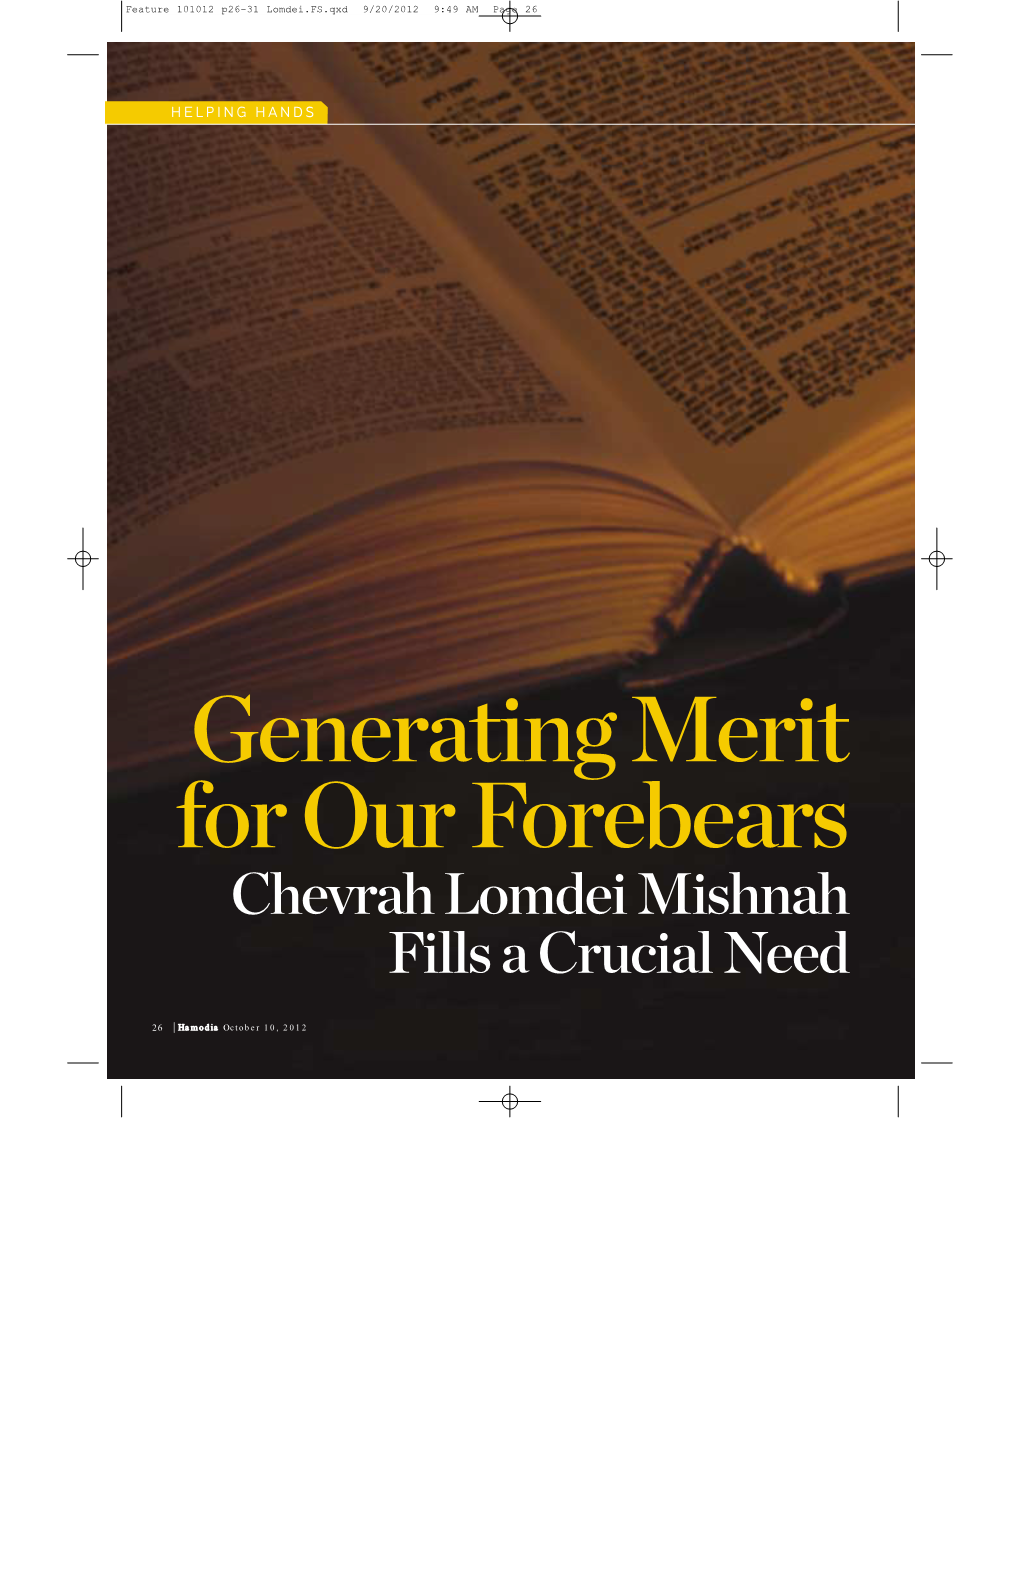 Chevrah Lomdei Mishnah Fills a Crucial Need